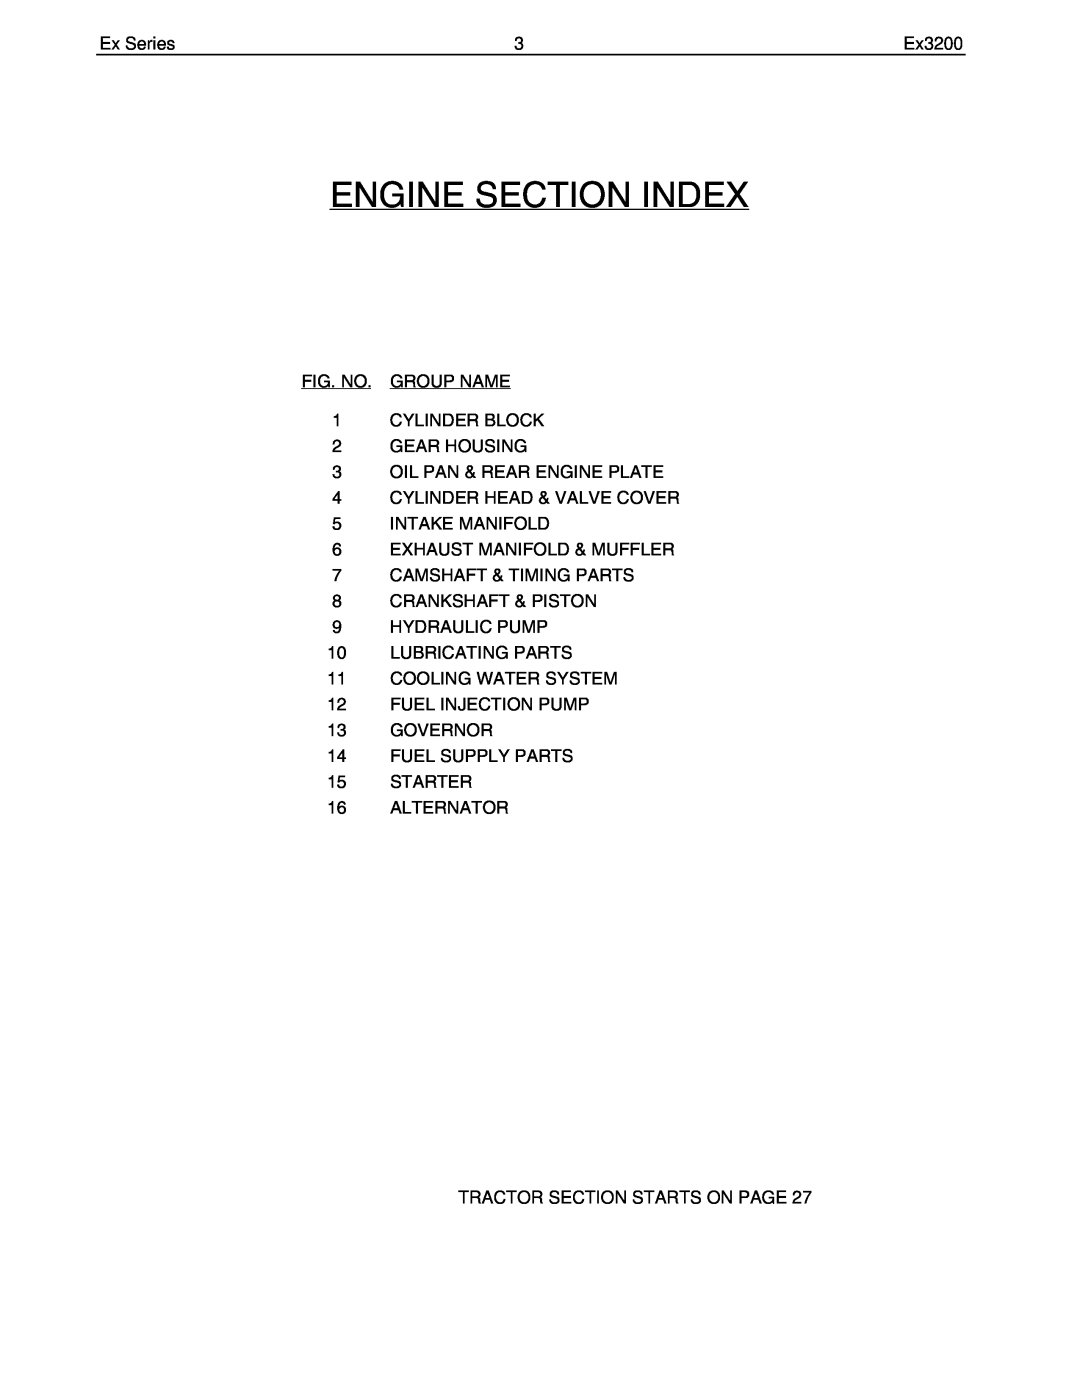 Cub Cadet Ex32002 manual Engine Section Index 